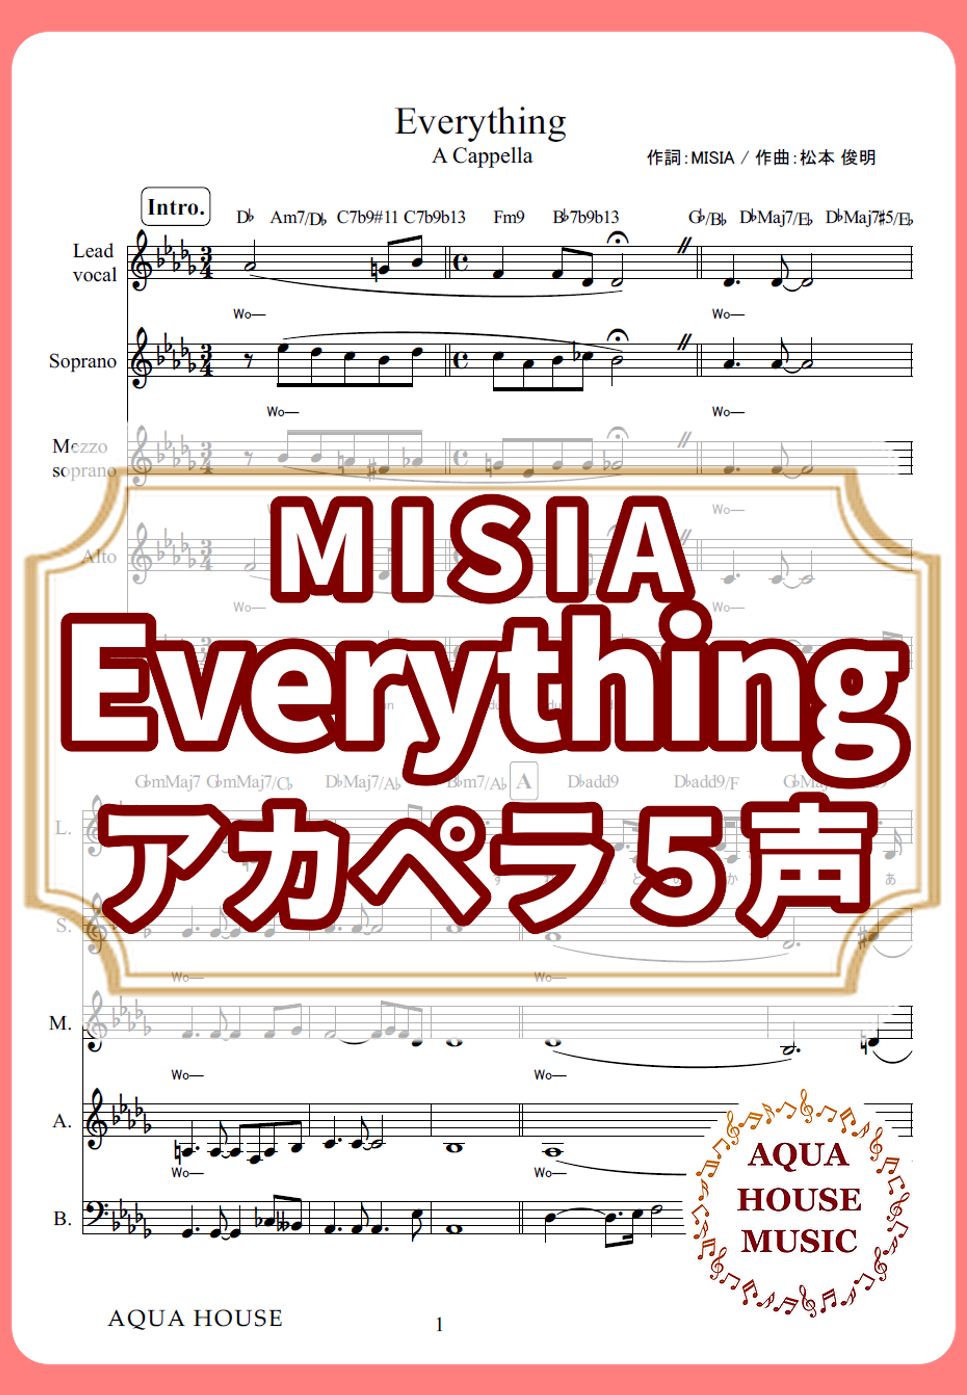 MISIA - Everything (アカペラ楽譜♪５声ボイパなし) by 飯田 亜紗子